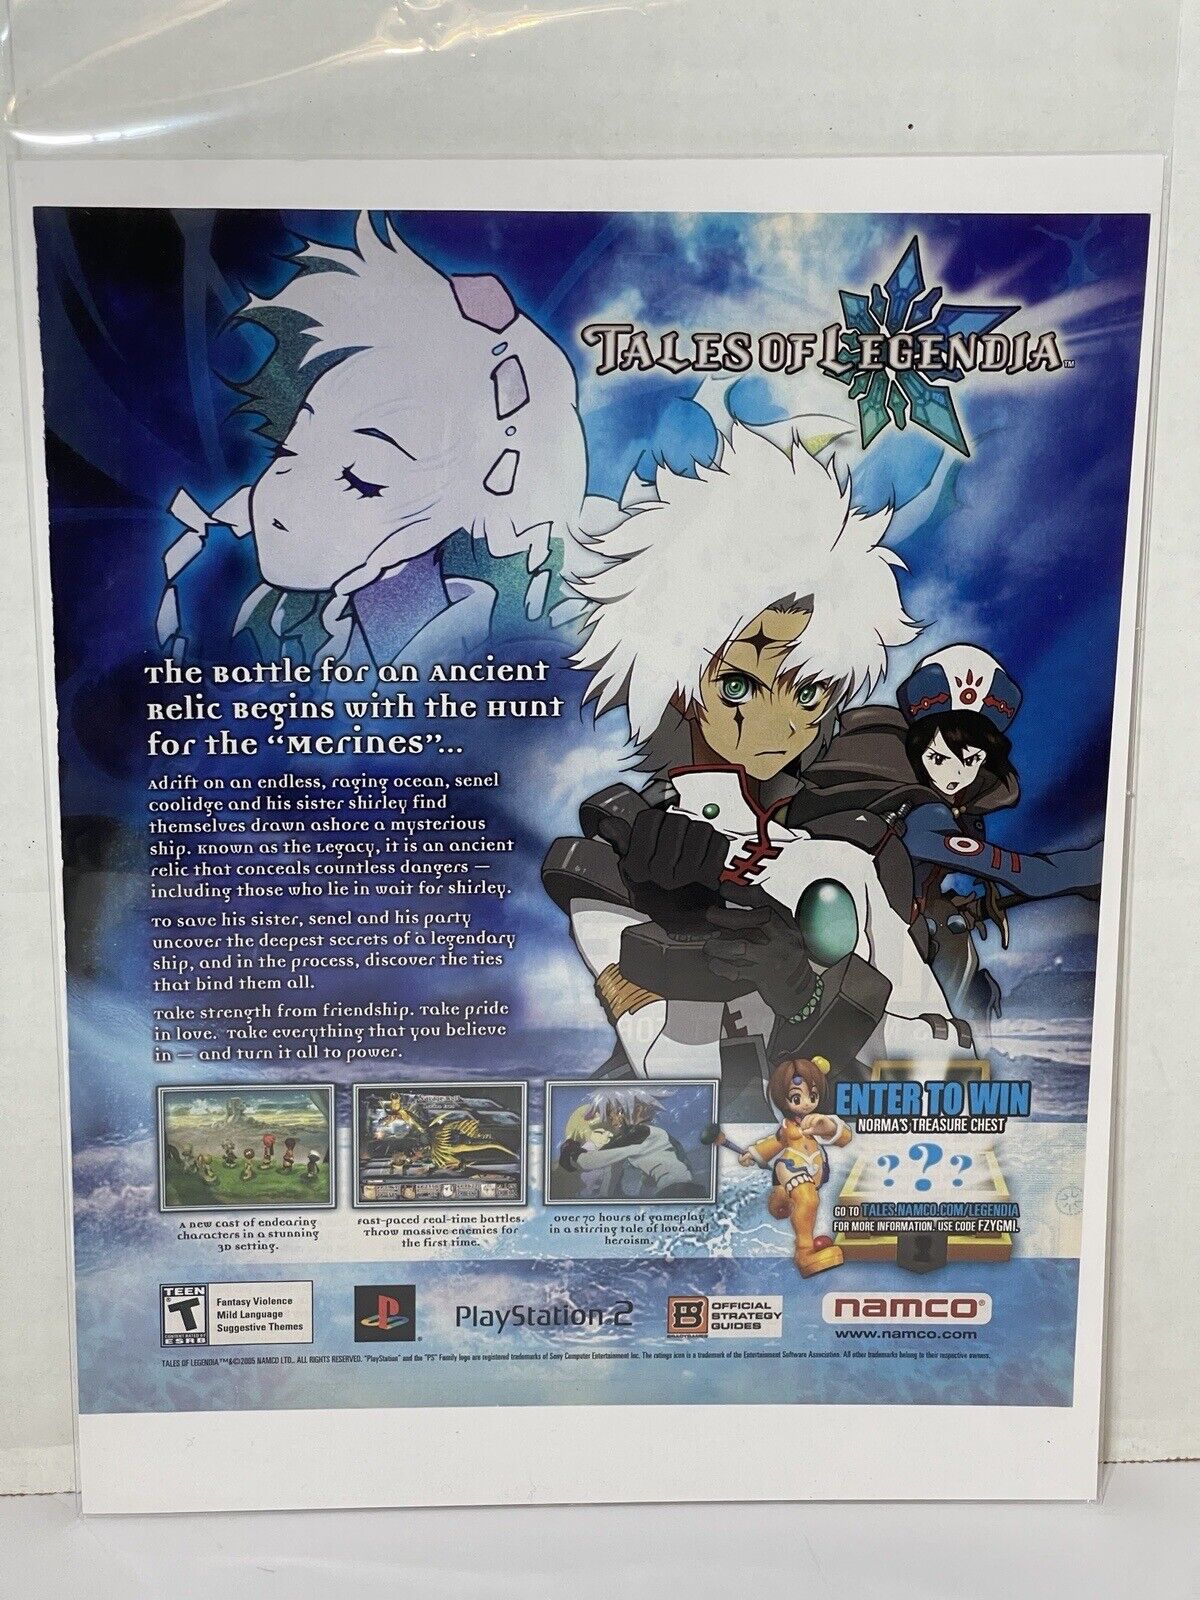 2006 Tales of Legendia PS2 Playstation 2 Vintage Print Ad/Poster RPG Promo Art